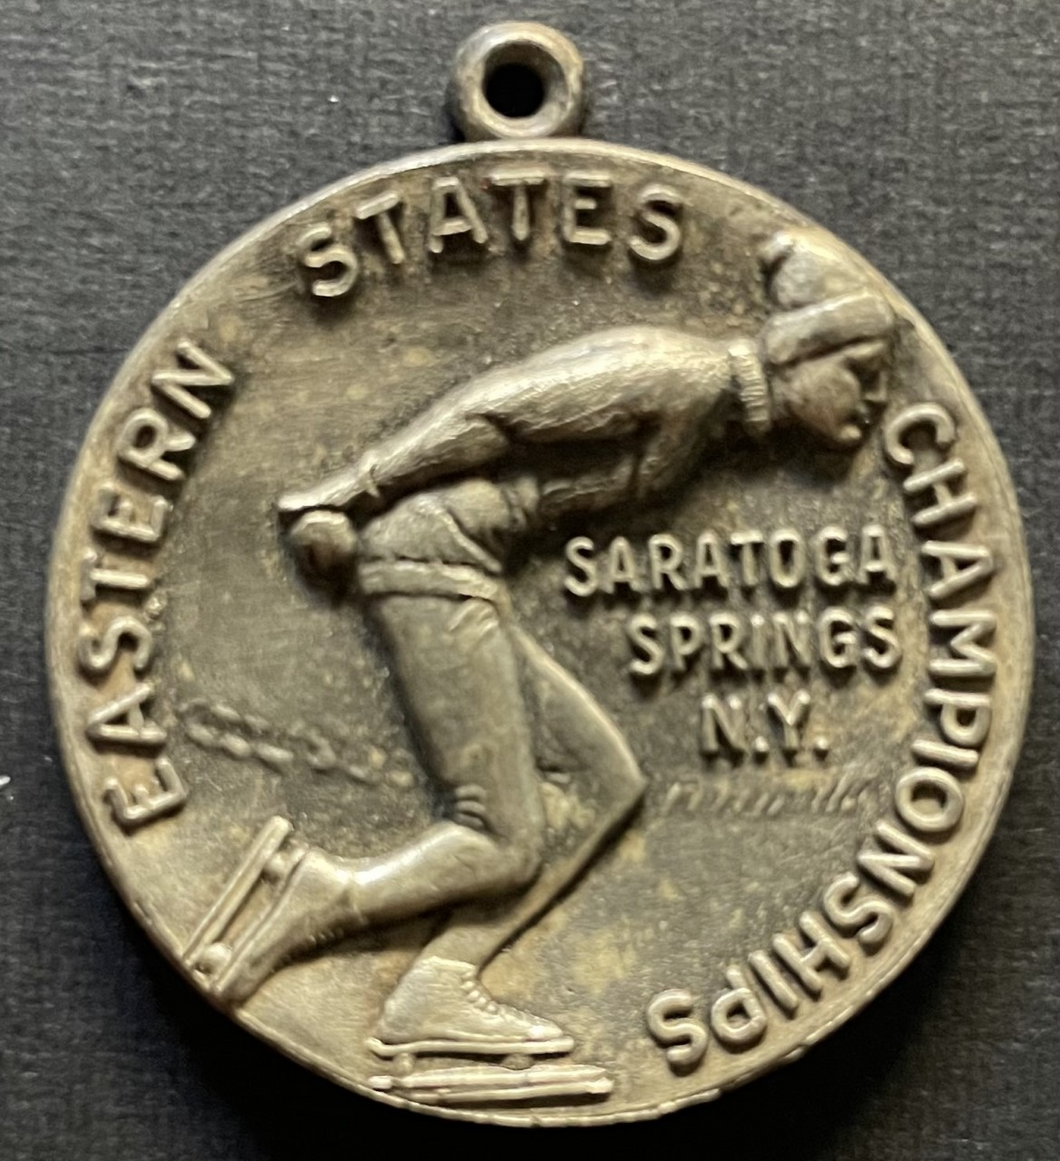 1900's Eastern USA Speed Skating Championships Medal Saratoga Springs New York